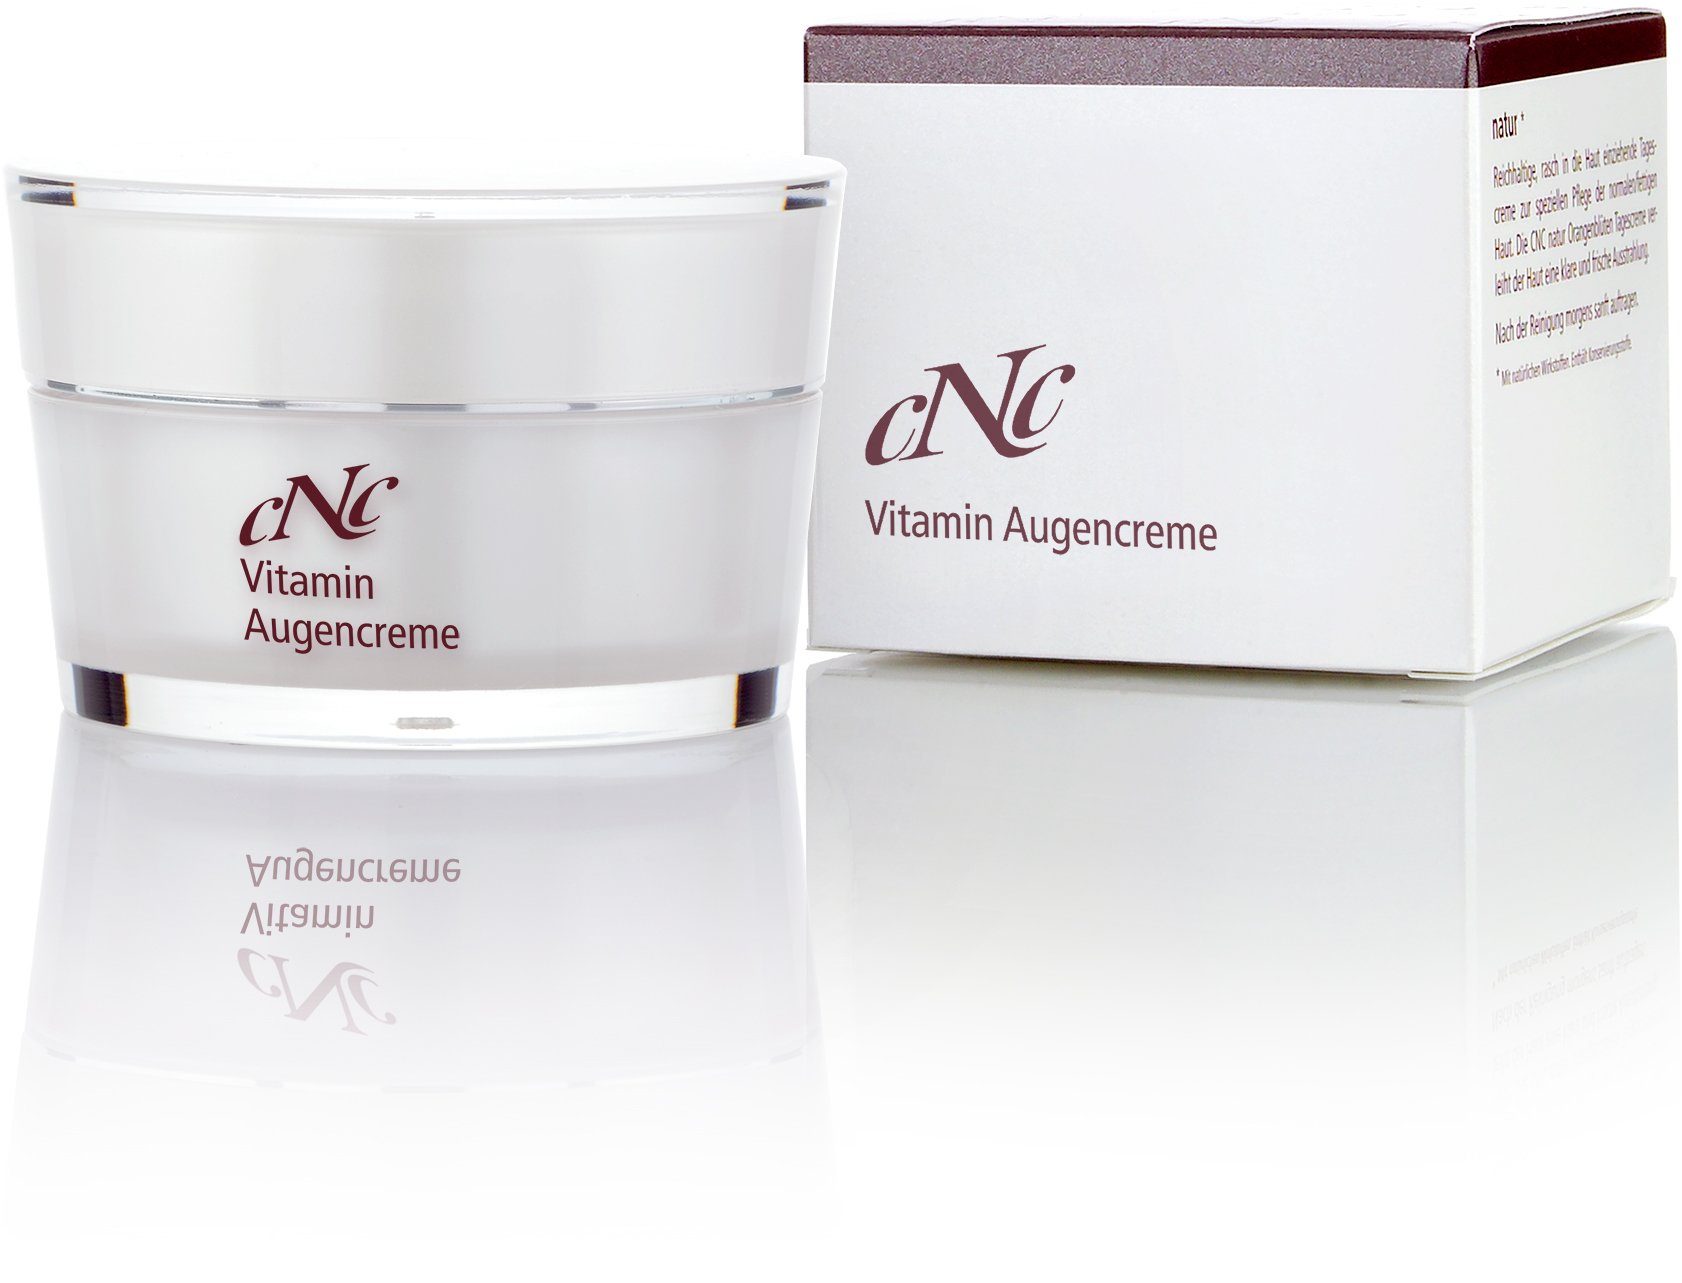 Haushalt Augenpflege CNC Cosmetics Anti-Aging-Augencreme Vitamin Augencreme, 15 ml - classic, Auch als Augenmaske anwendbar.